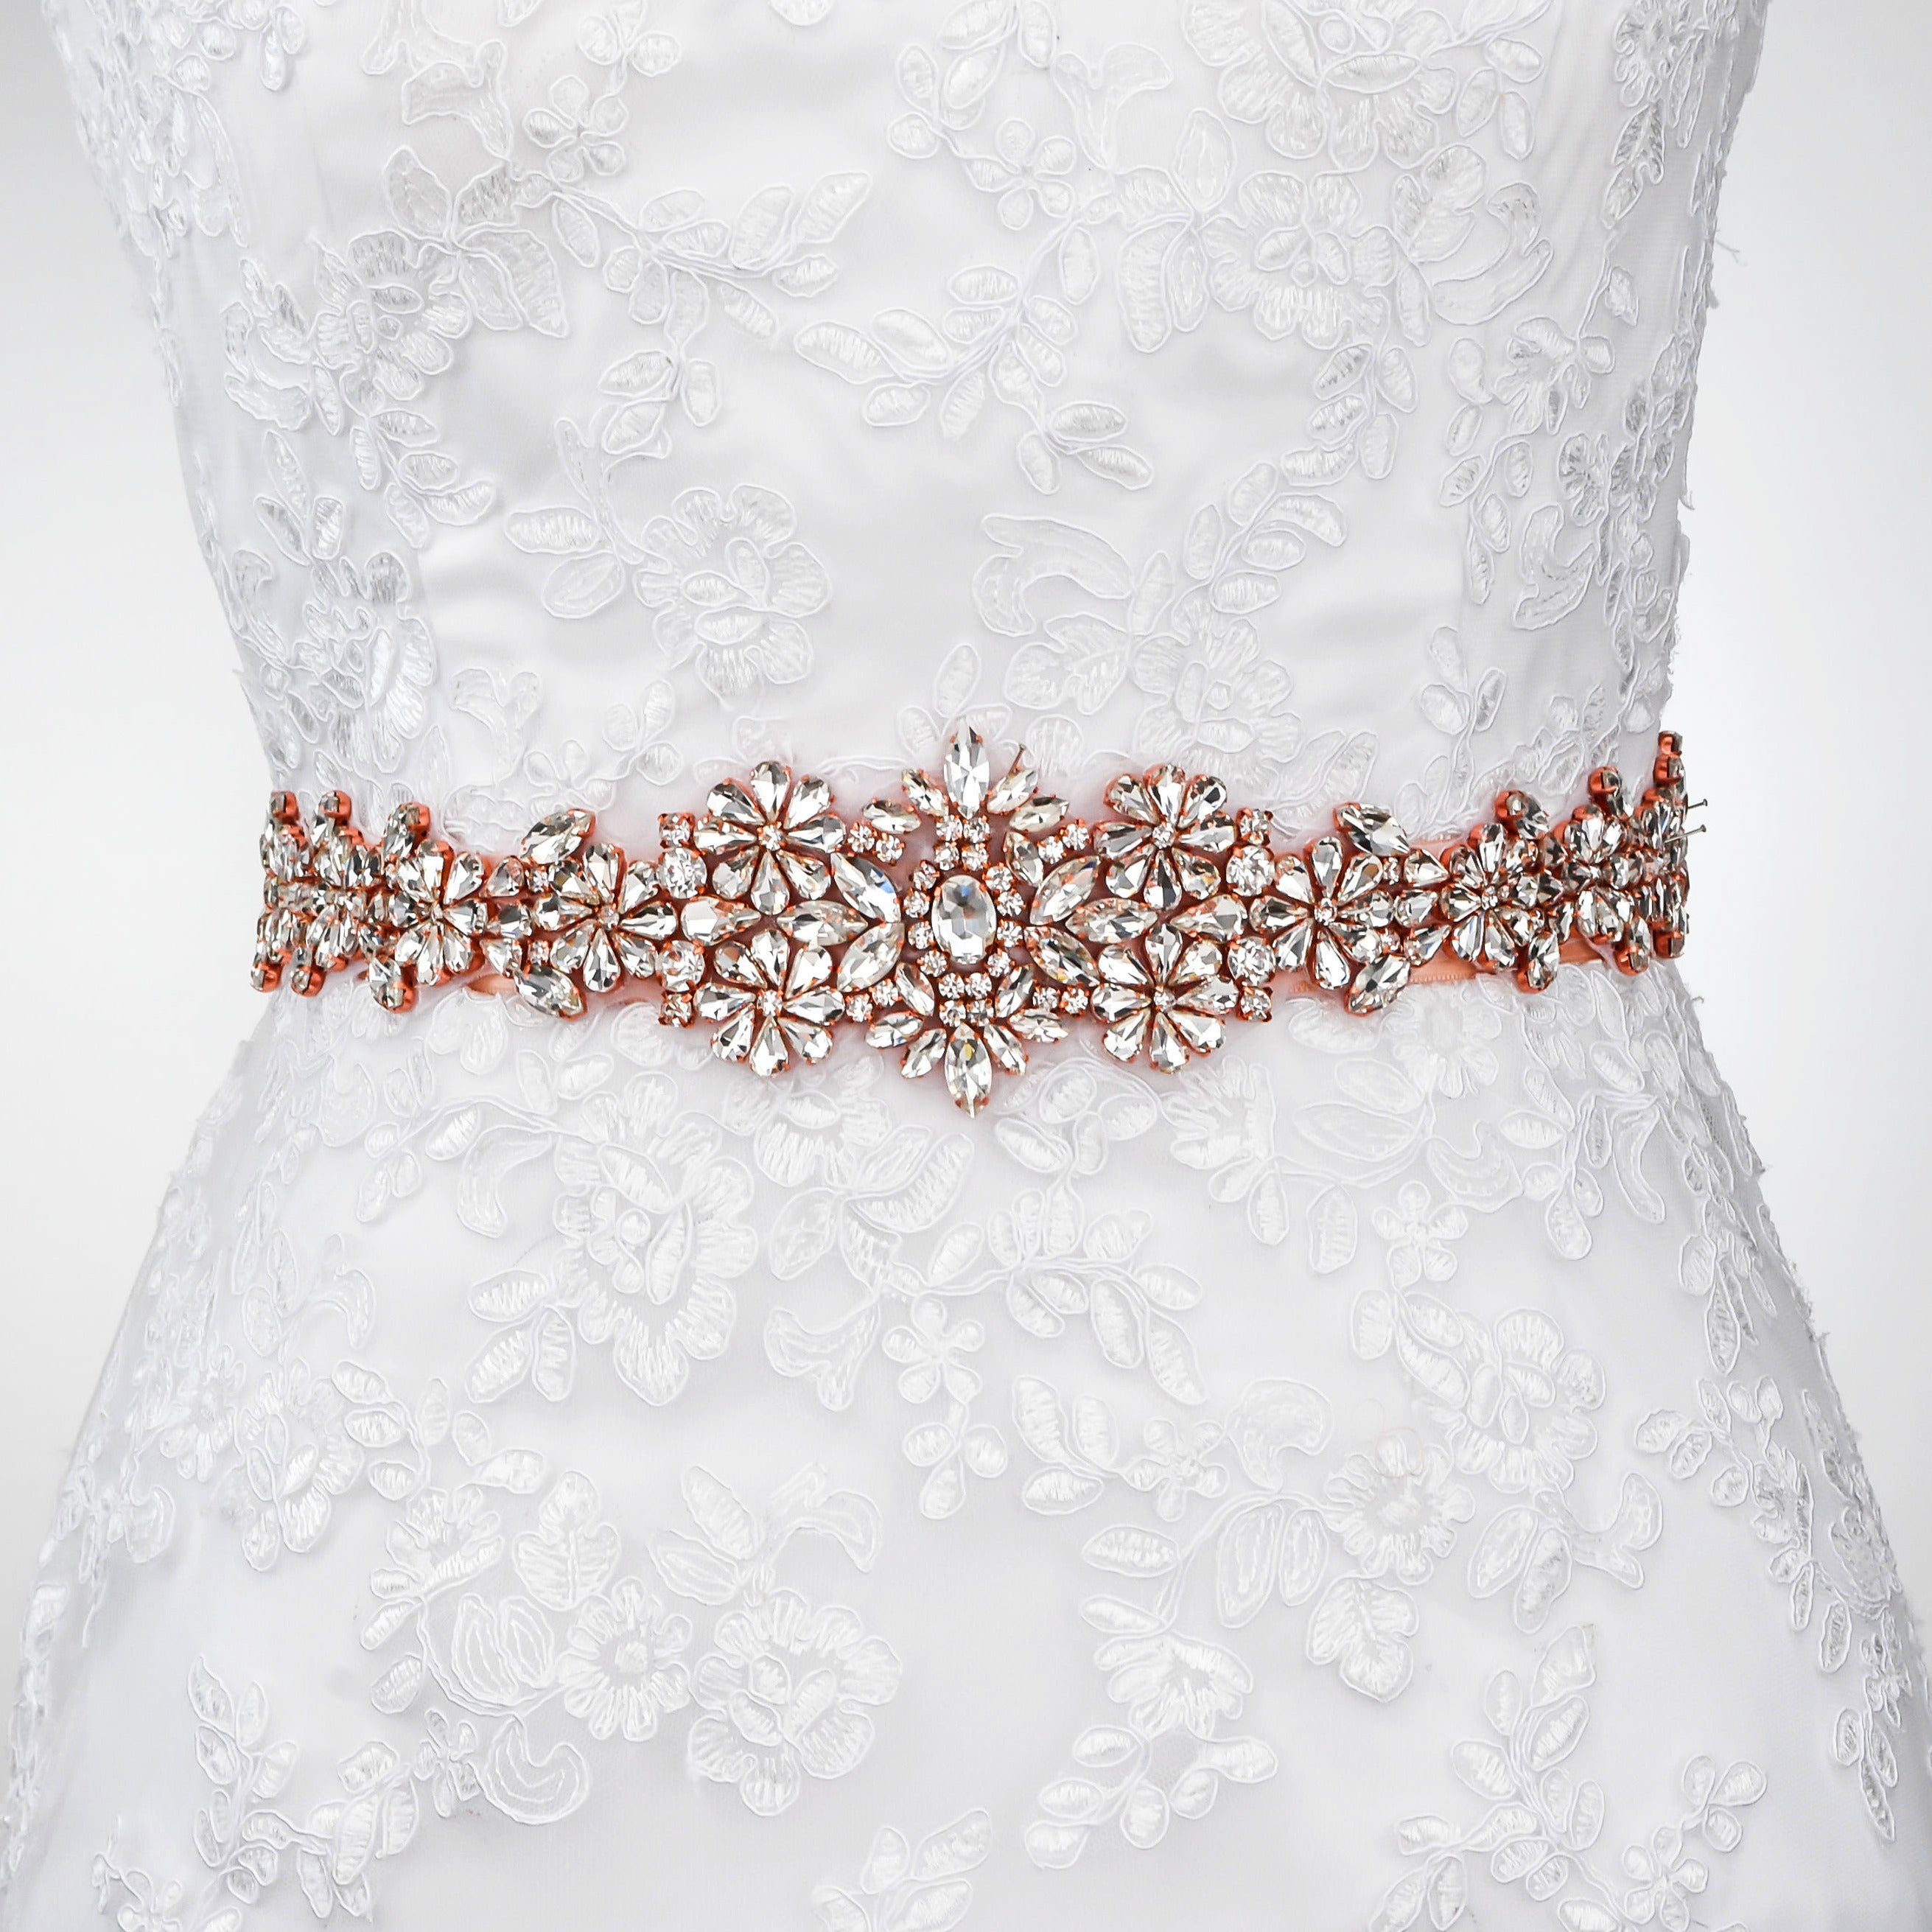 rose gold belts for bridesmaid dresses